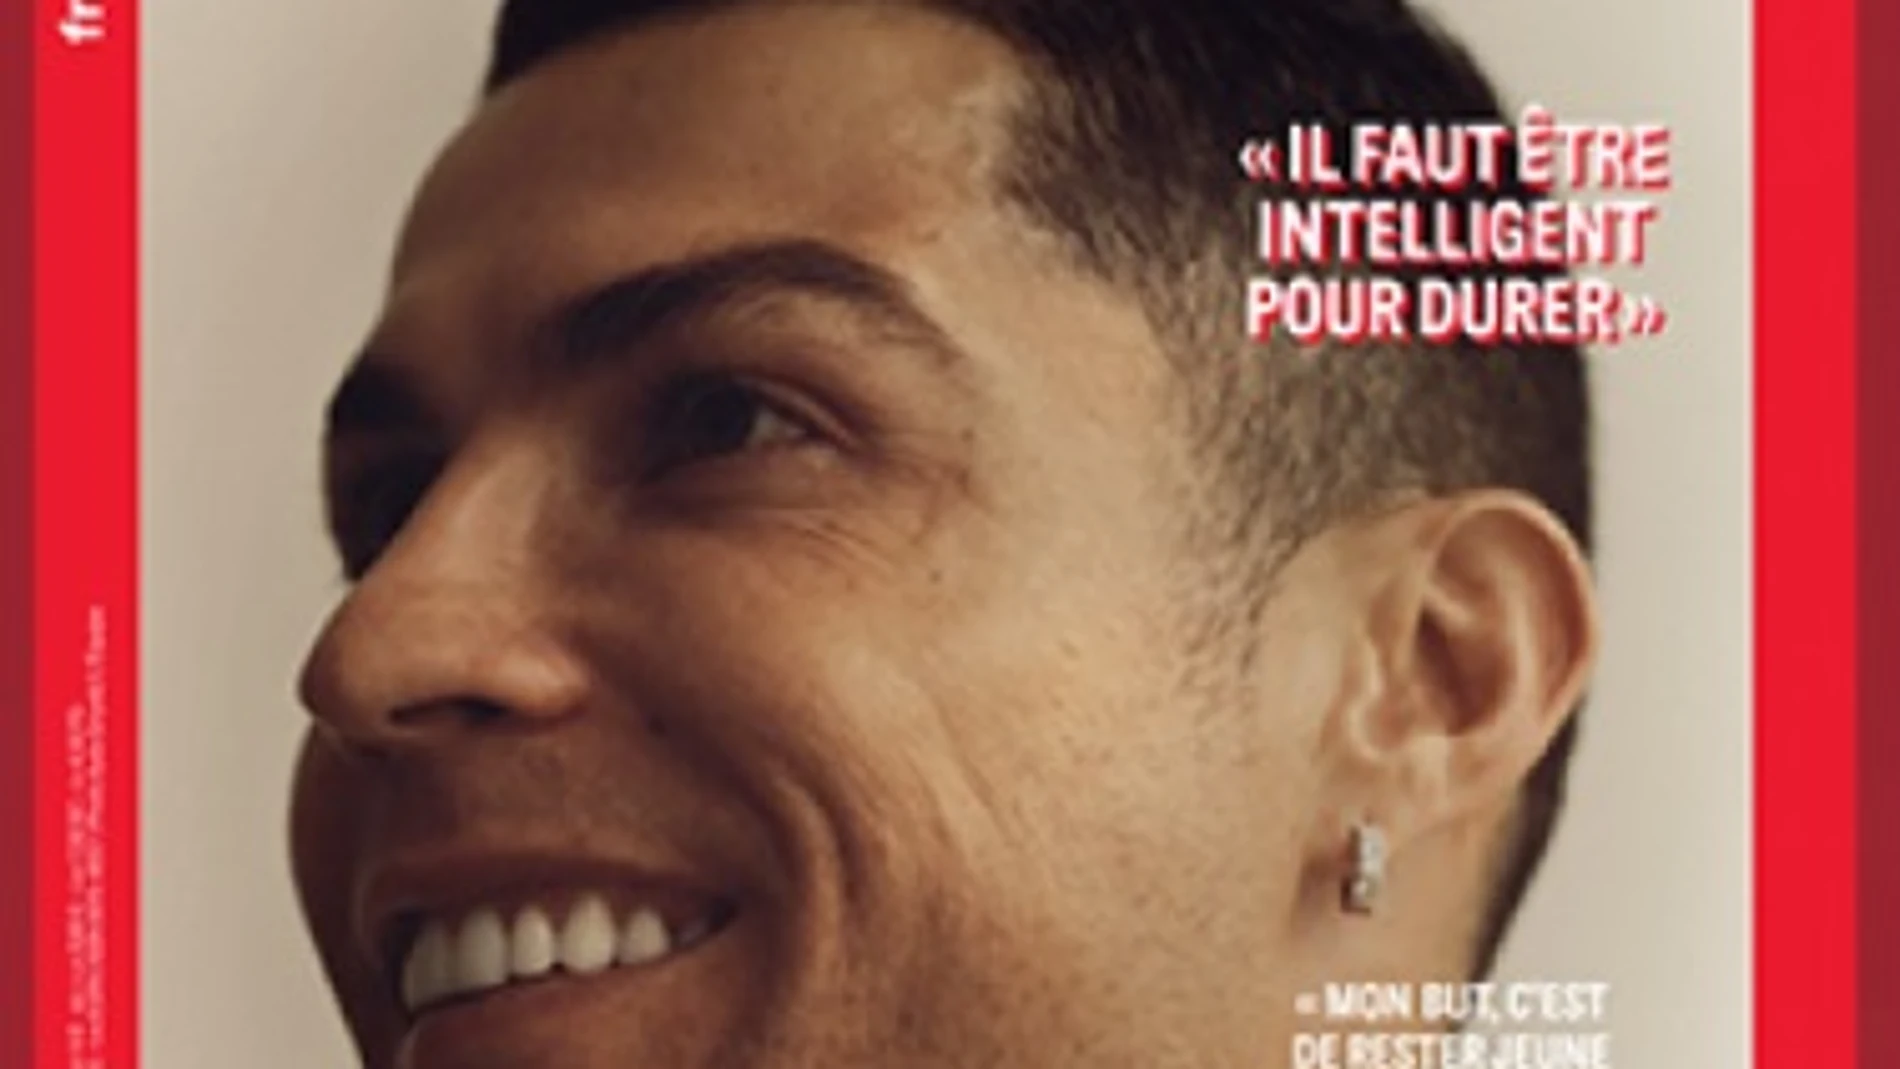 La portada de 'France Football', con Cristiano Ronaldo como protagonista